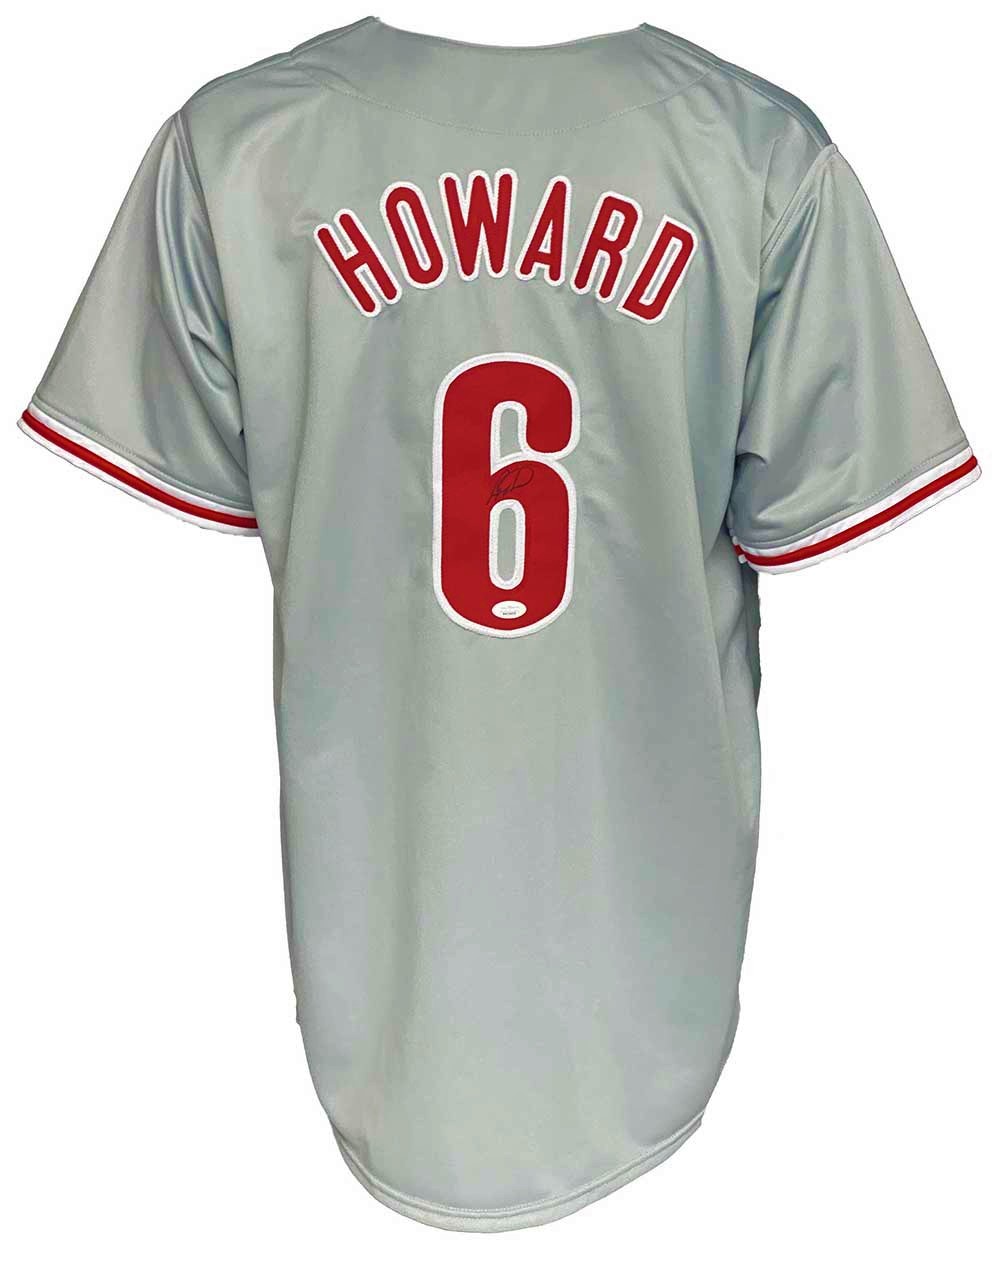 Ryan Howard Signed Baseball, Autographed Ryan Howard Baseball